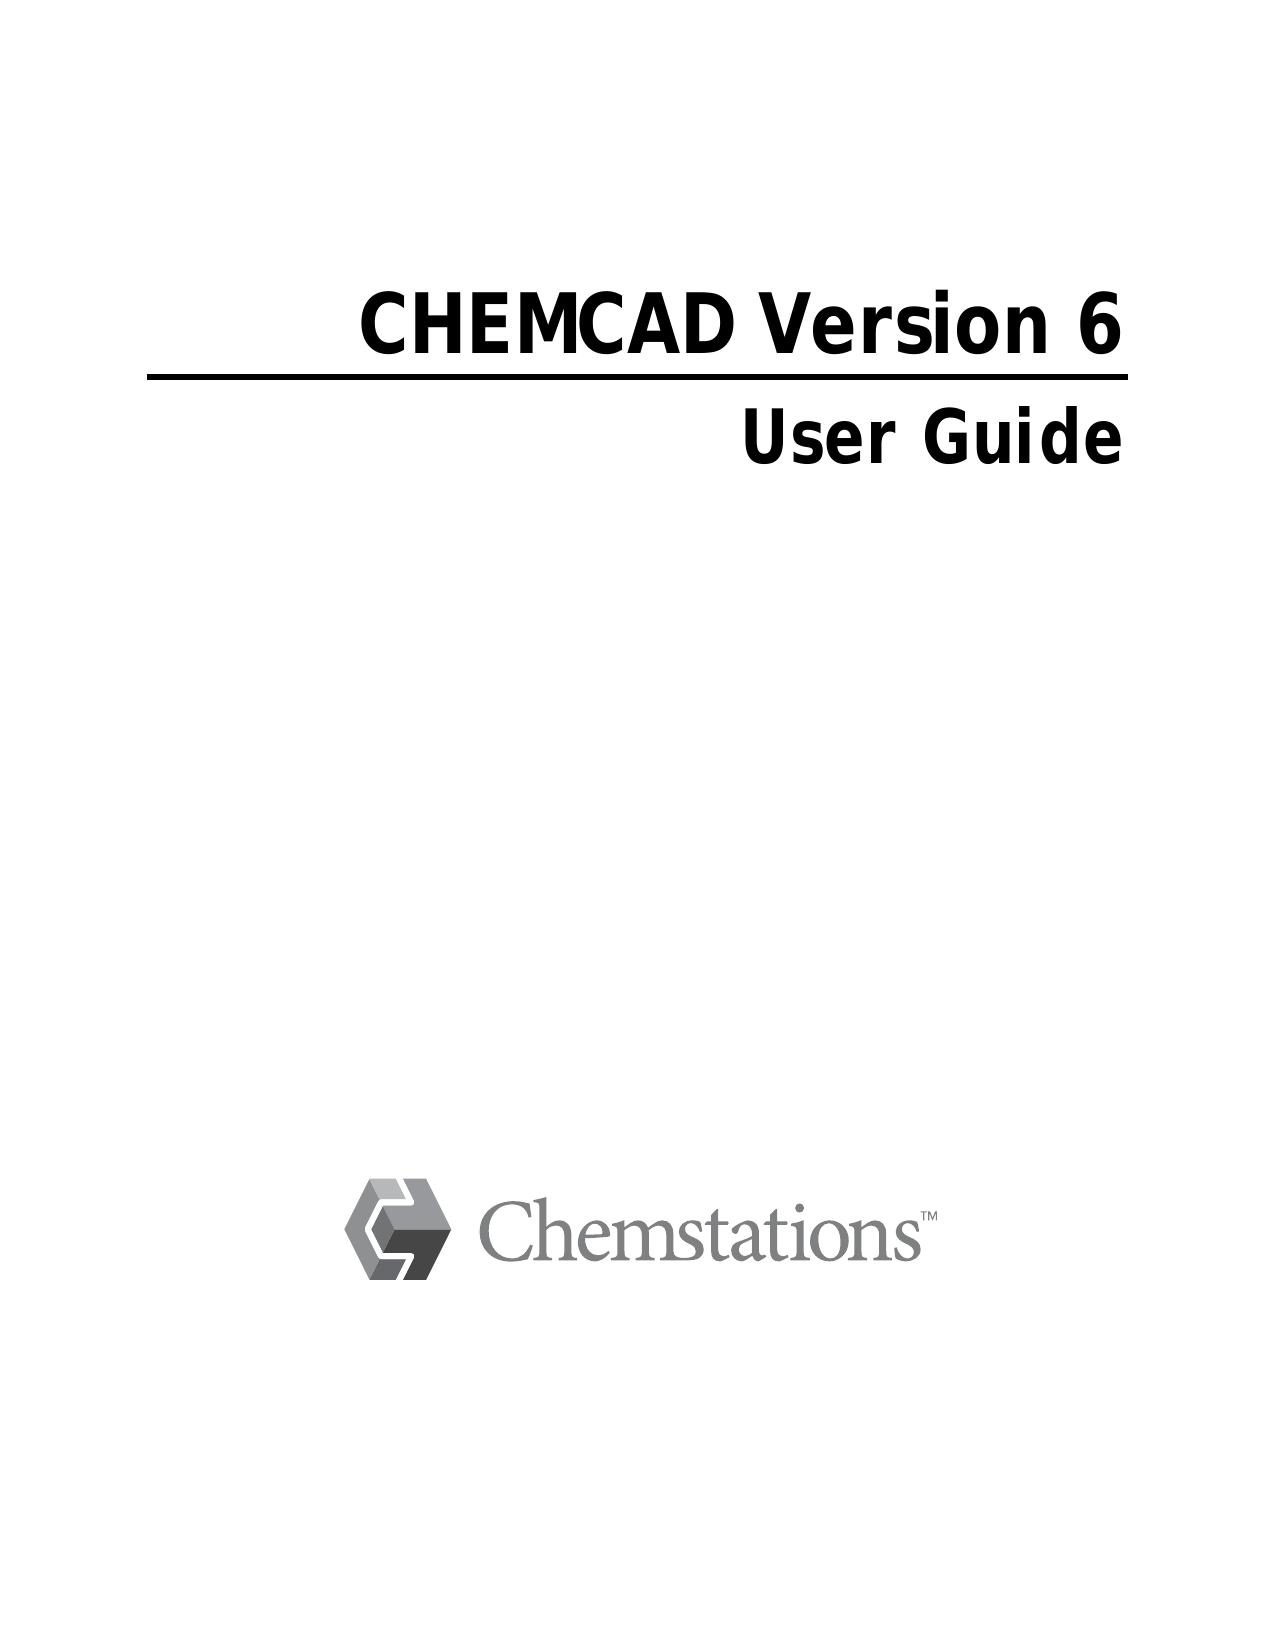 Microsoft Word - CHEMCAD 6.4 frontmatter.doc